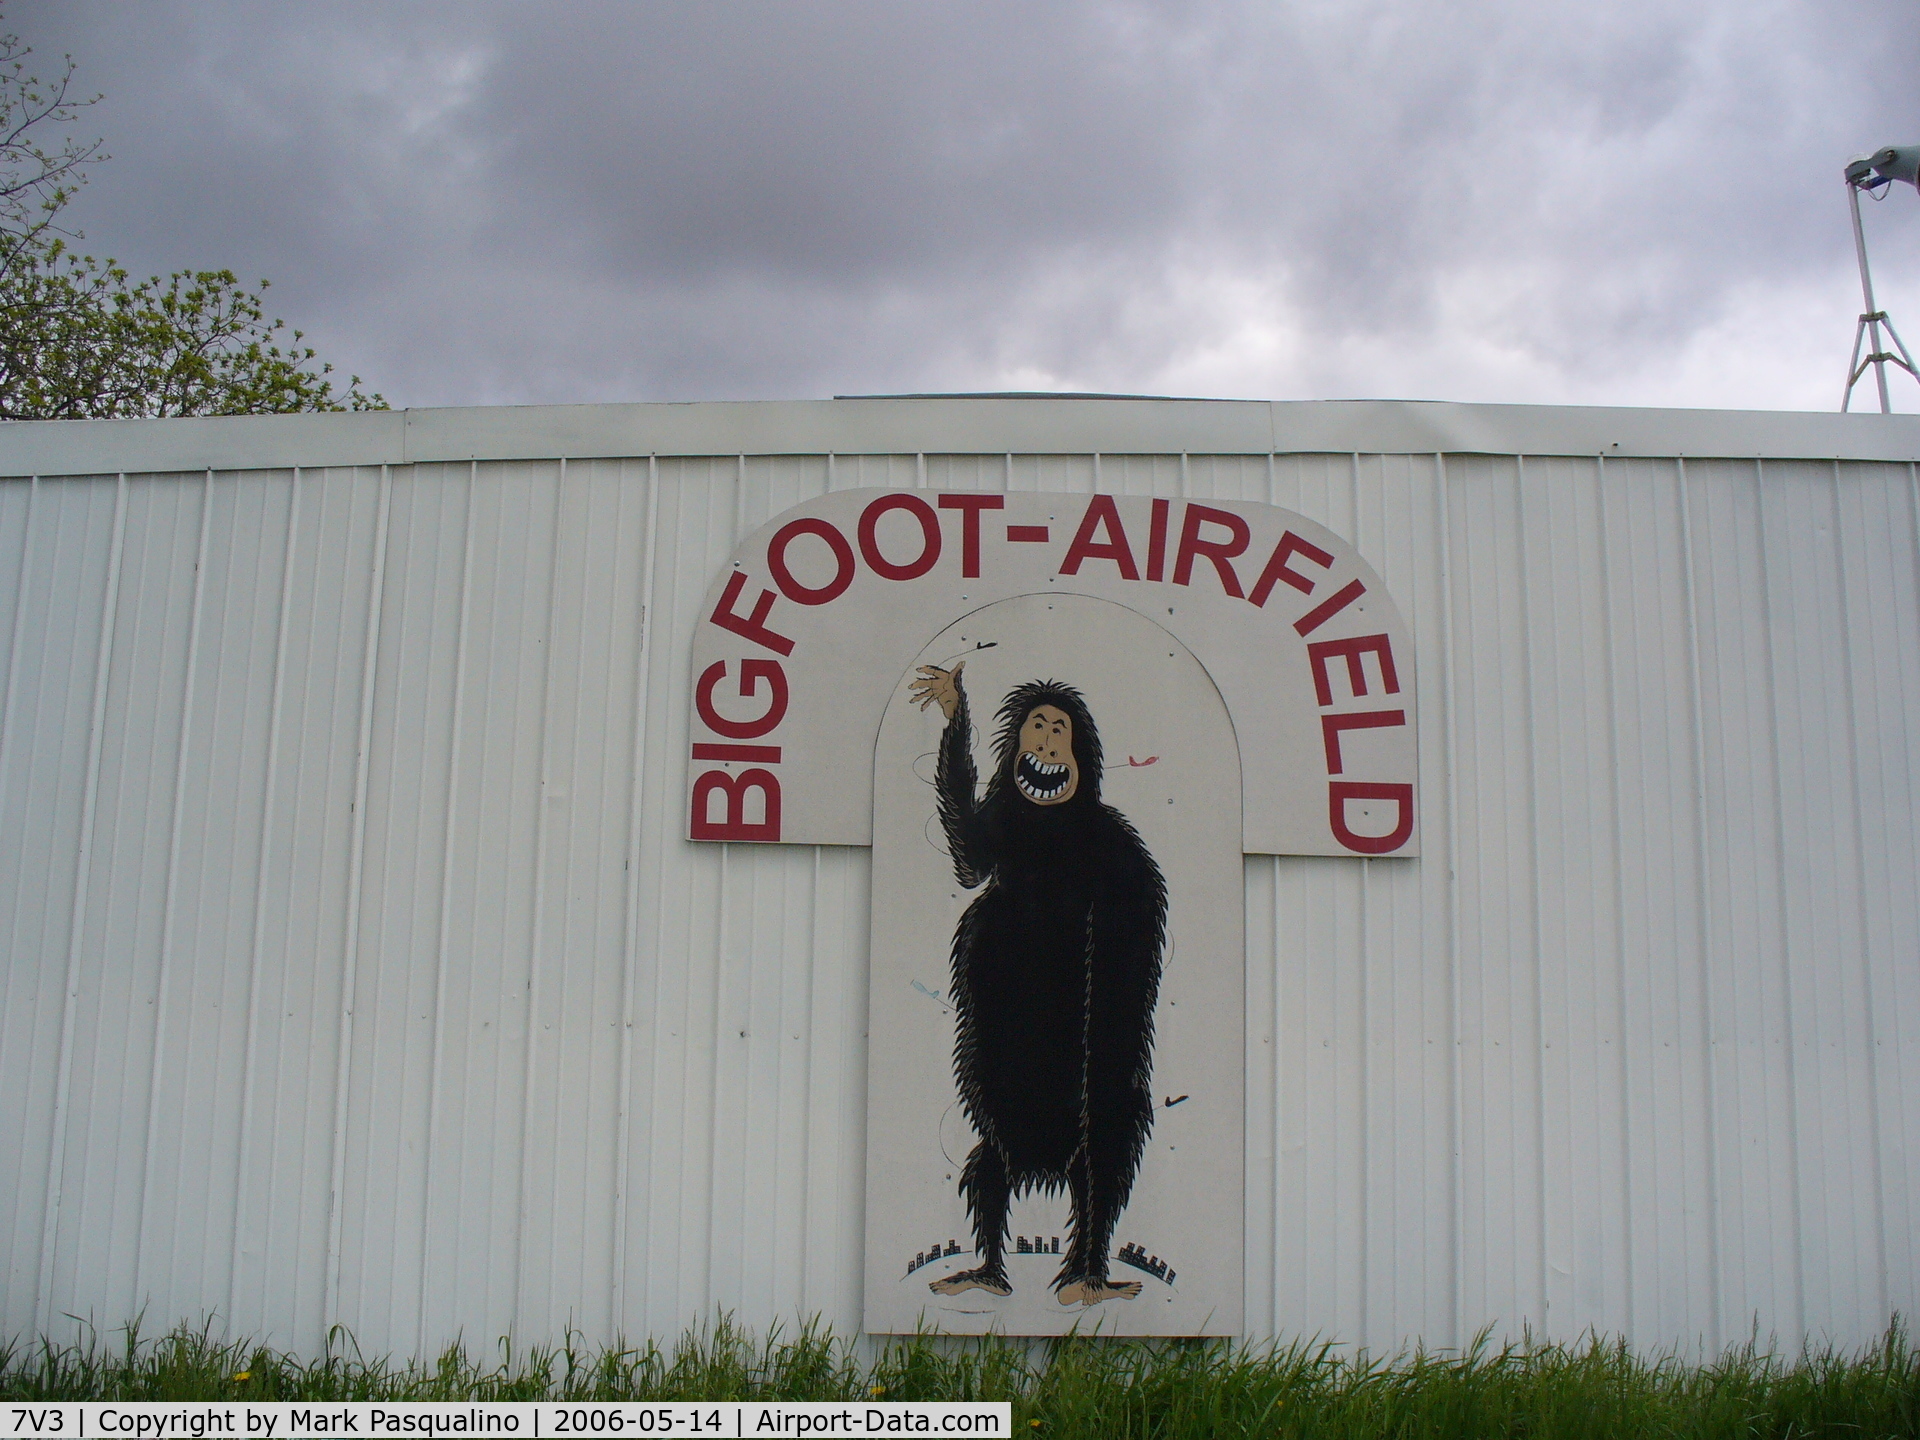 Big Foot Airfield Airport (7V3) - Greetings from Bigfoot